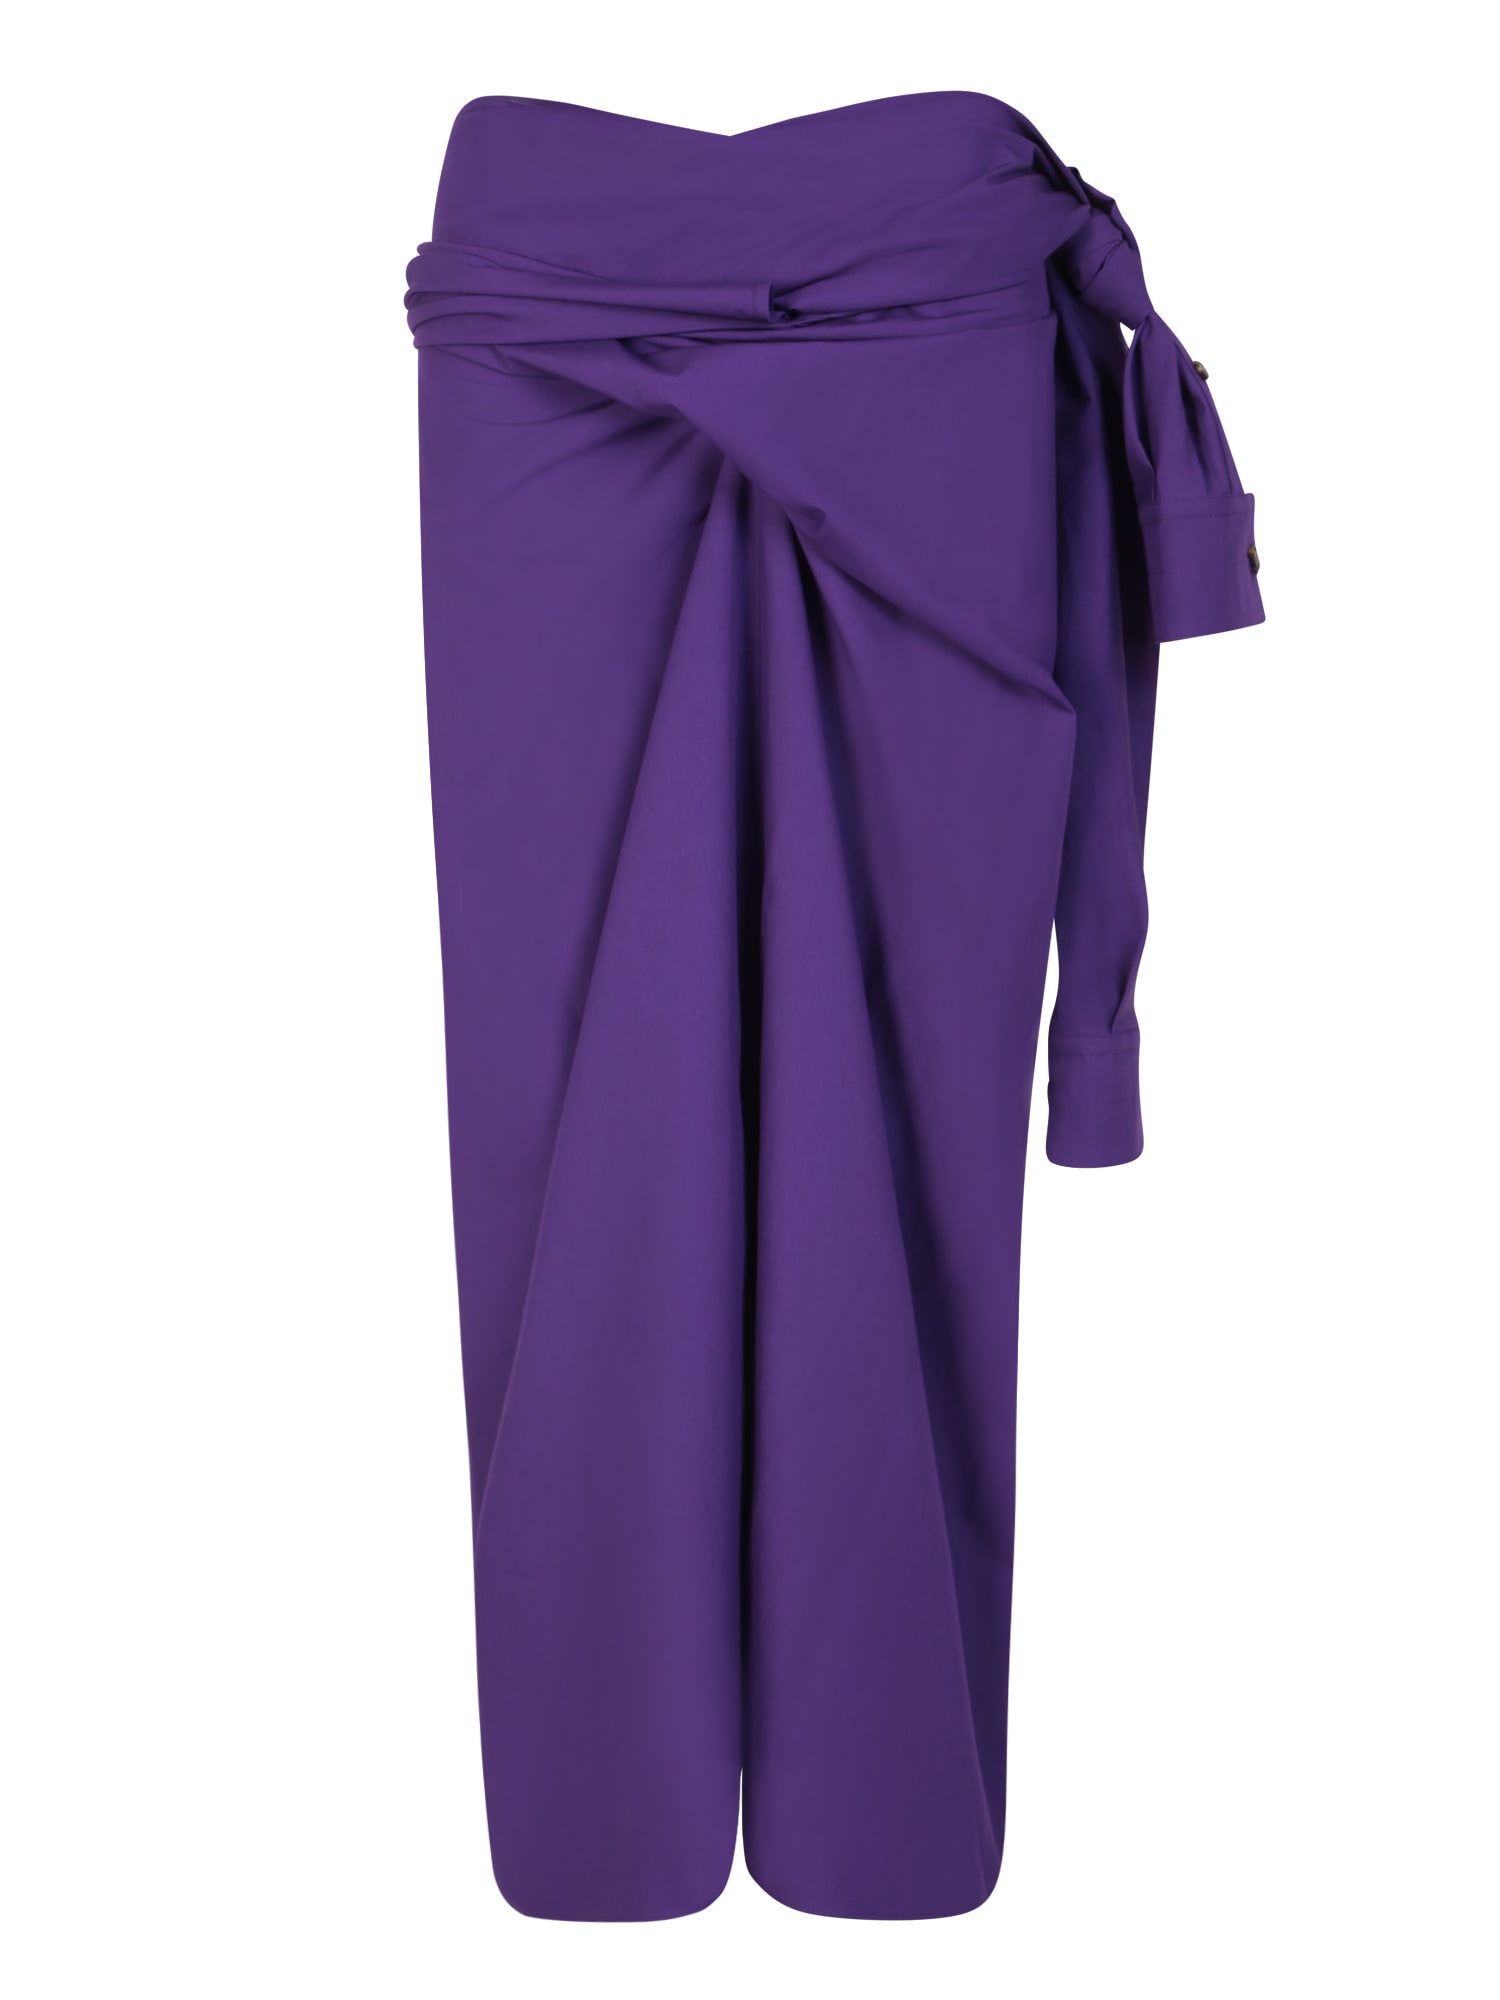 Wrapped Design Purple Skirt